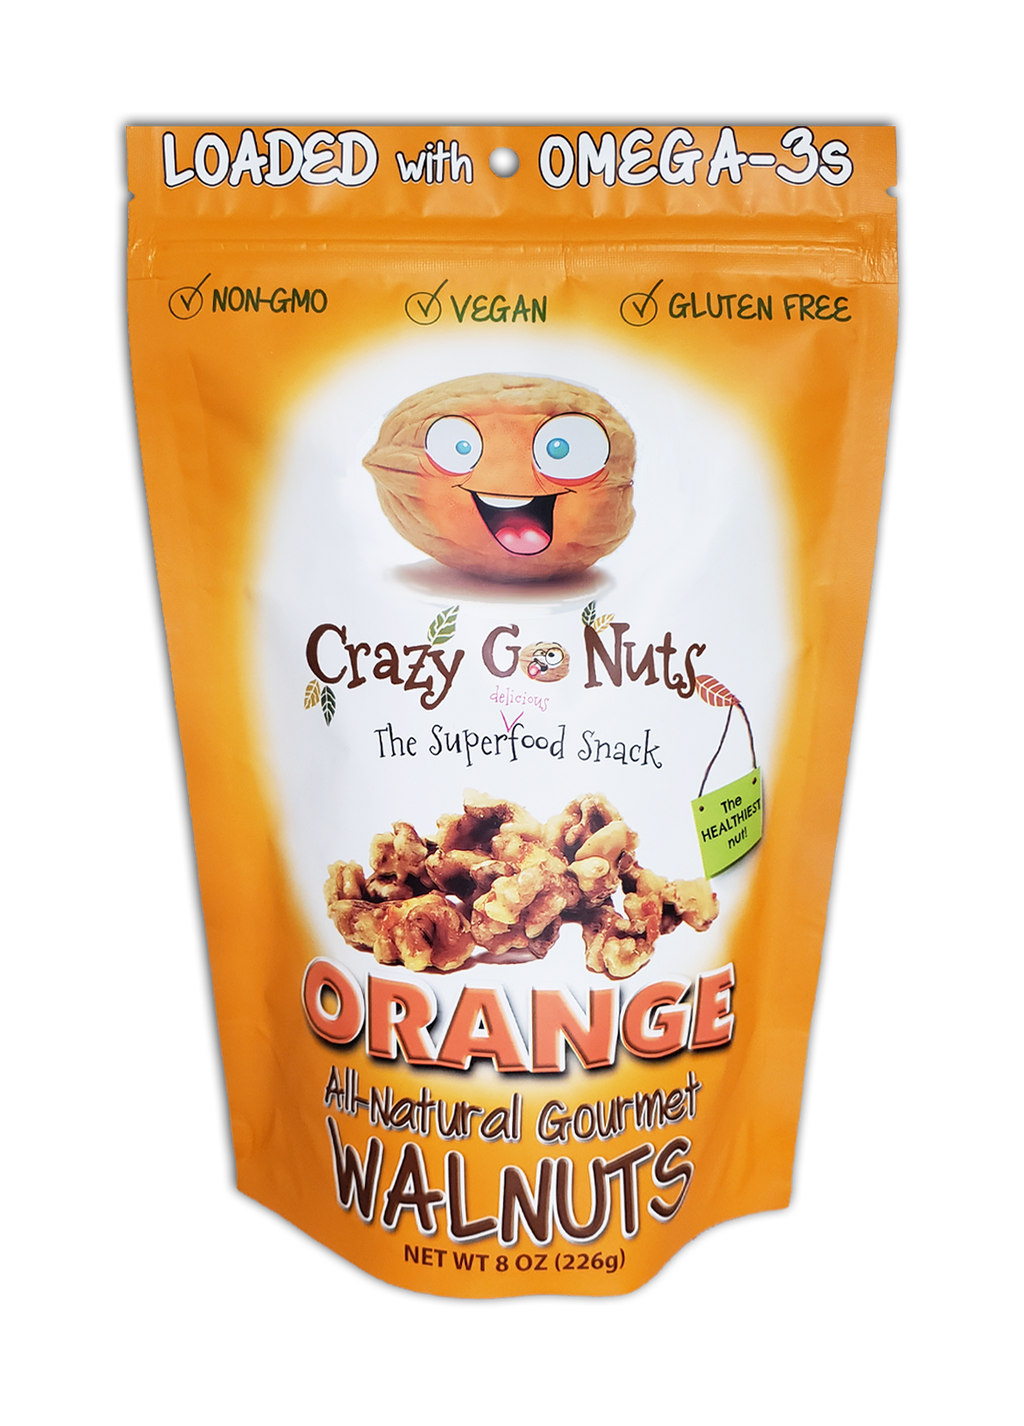 A bag of orange coated walnut snacks